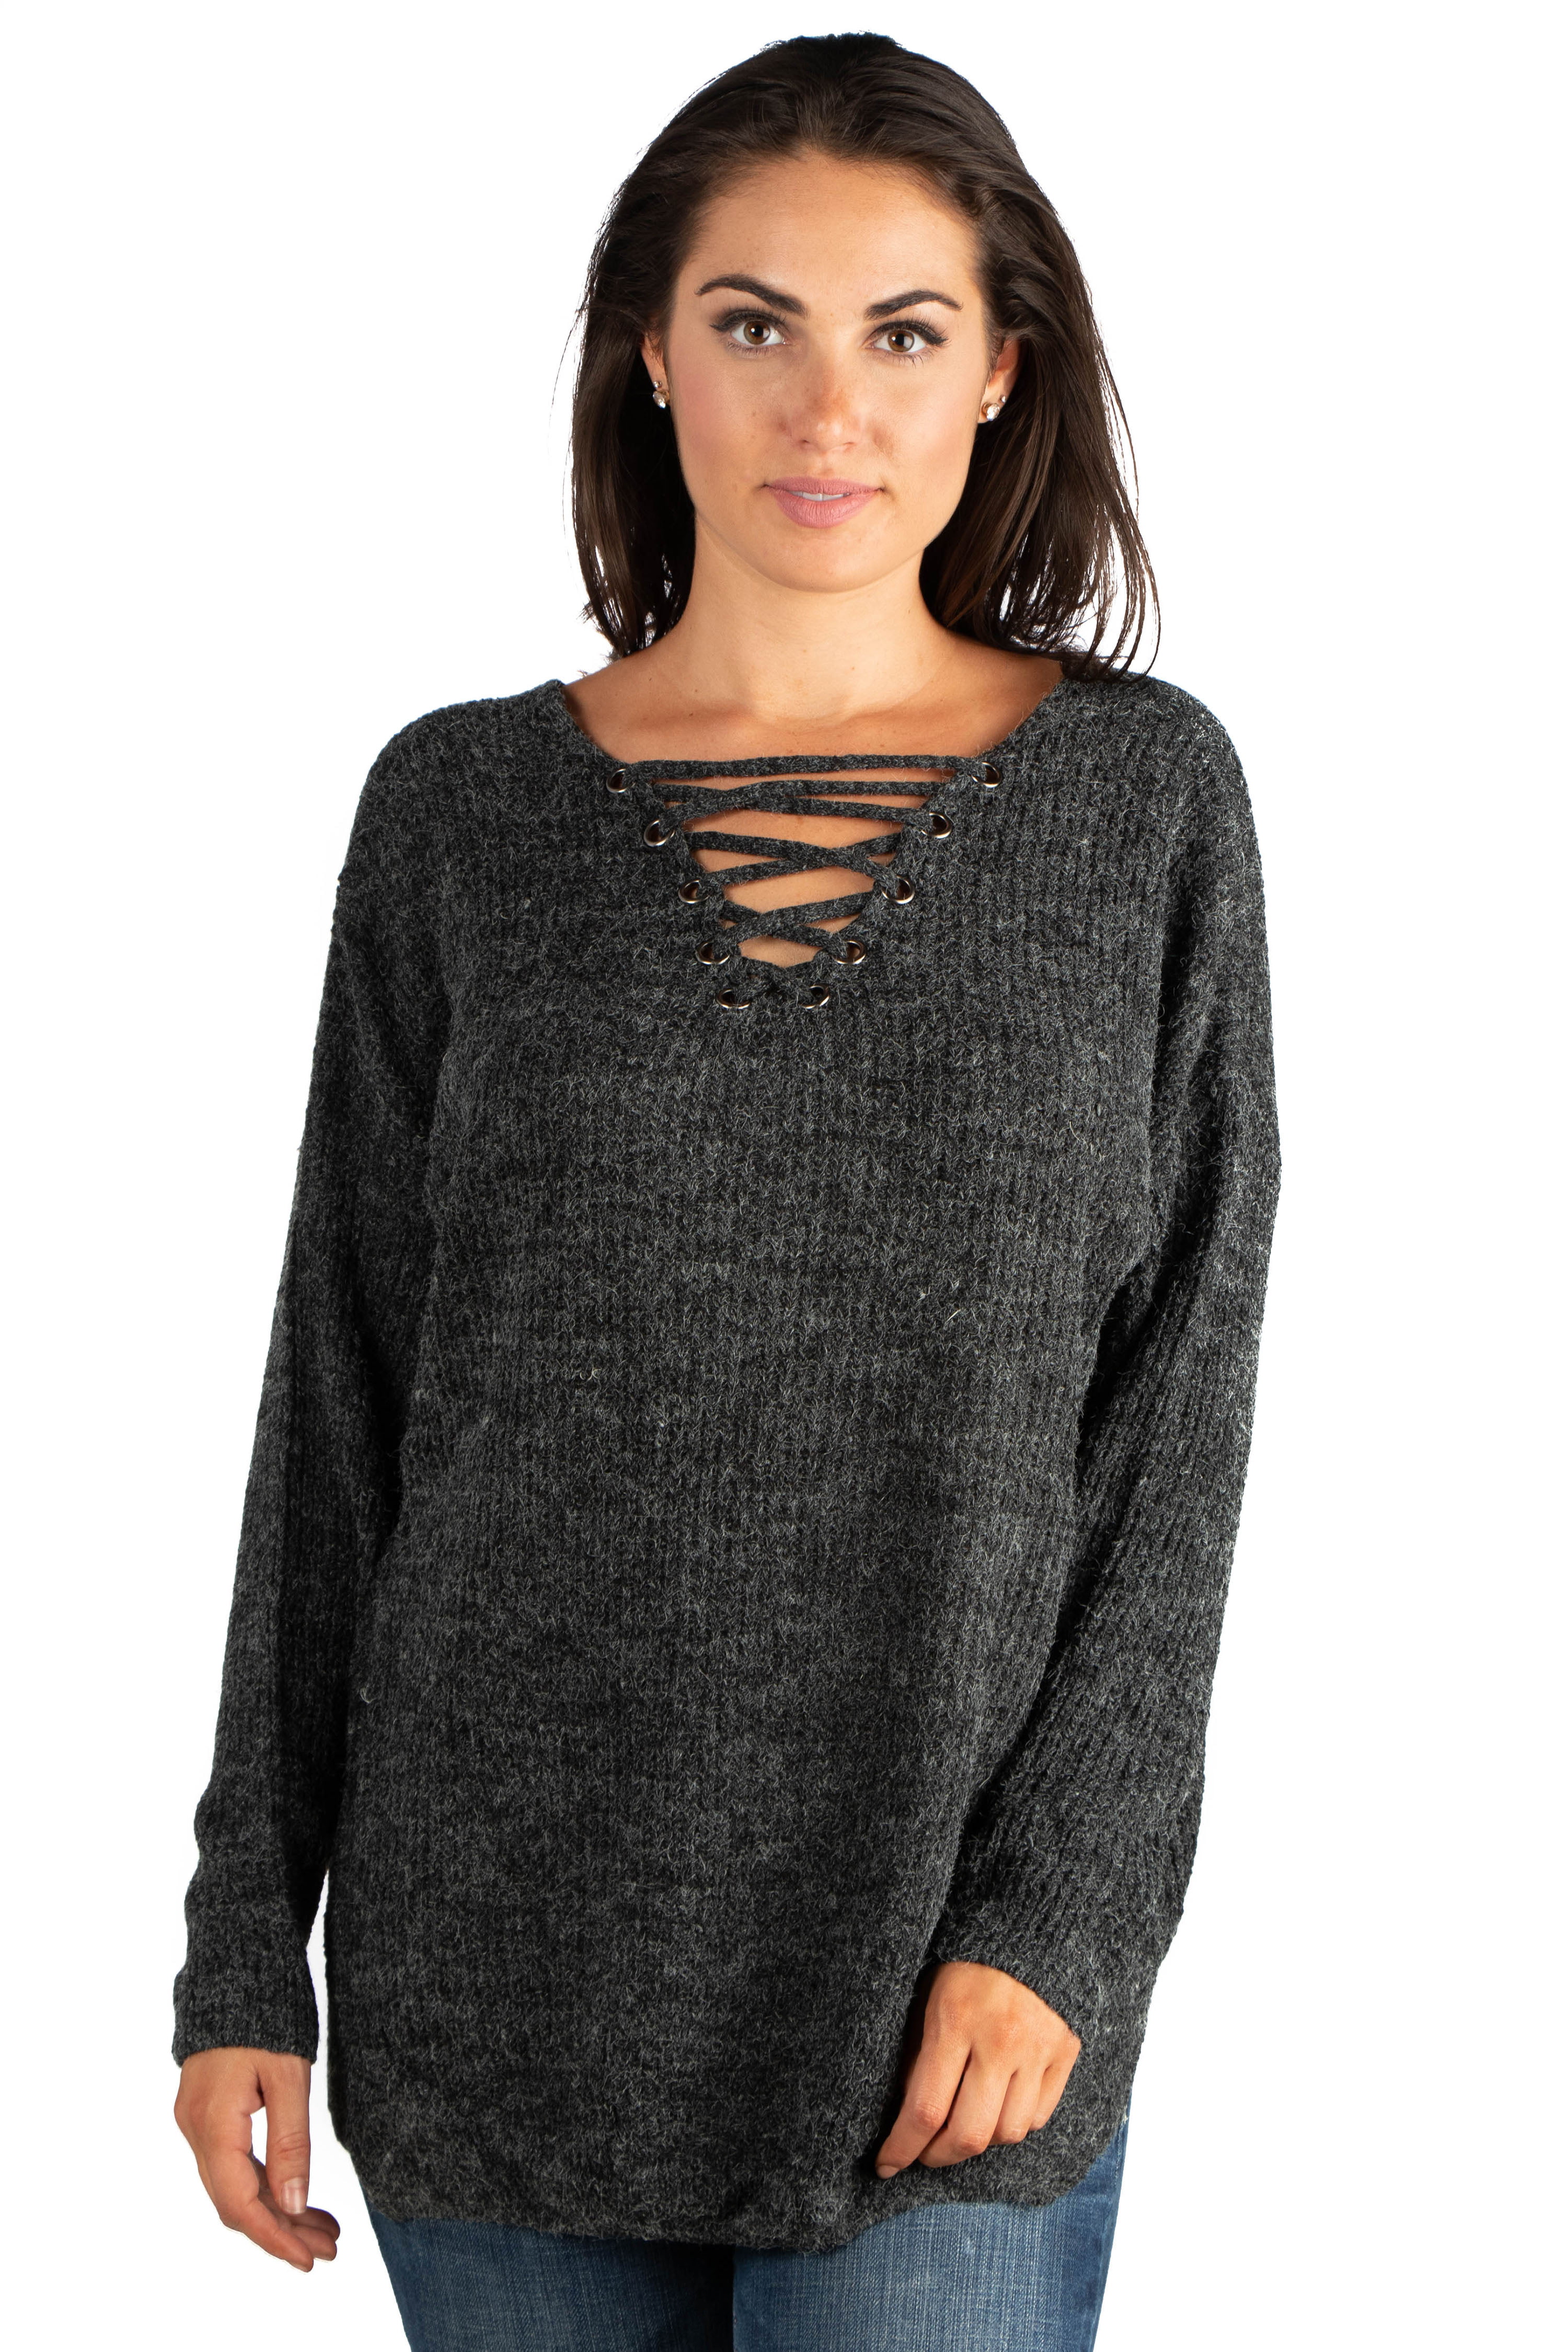 Women's Criss Cross Mock Lace-Up V-neck Sweater Top - Walmart.com